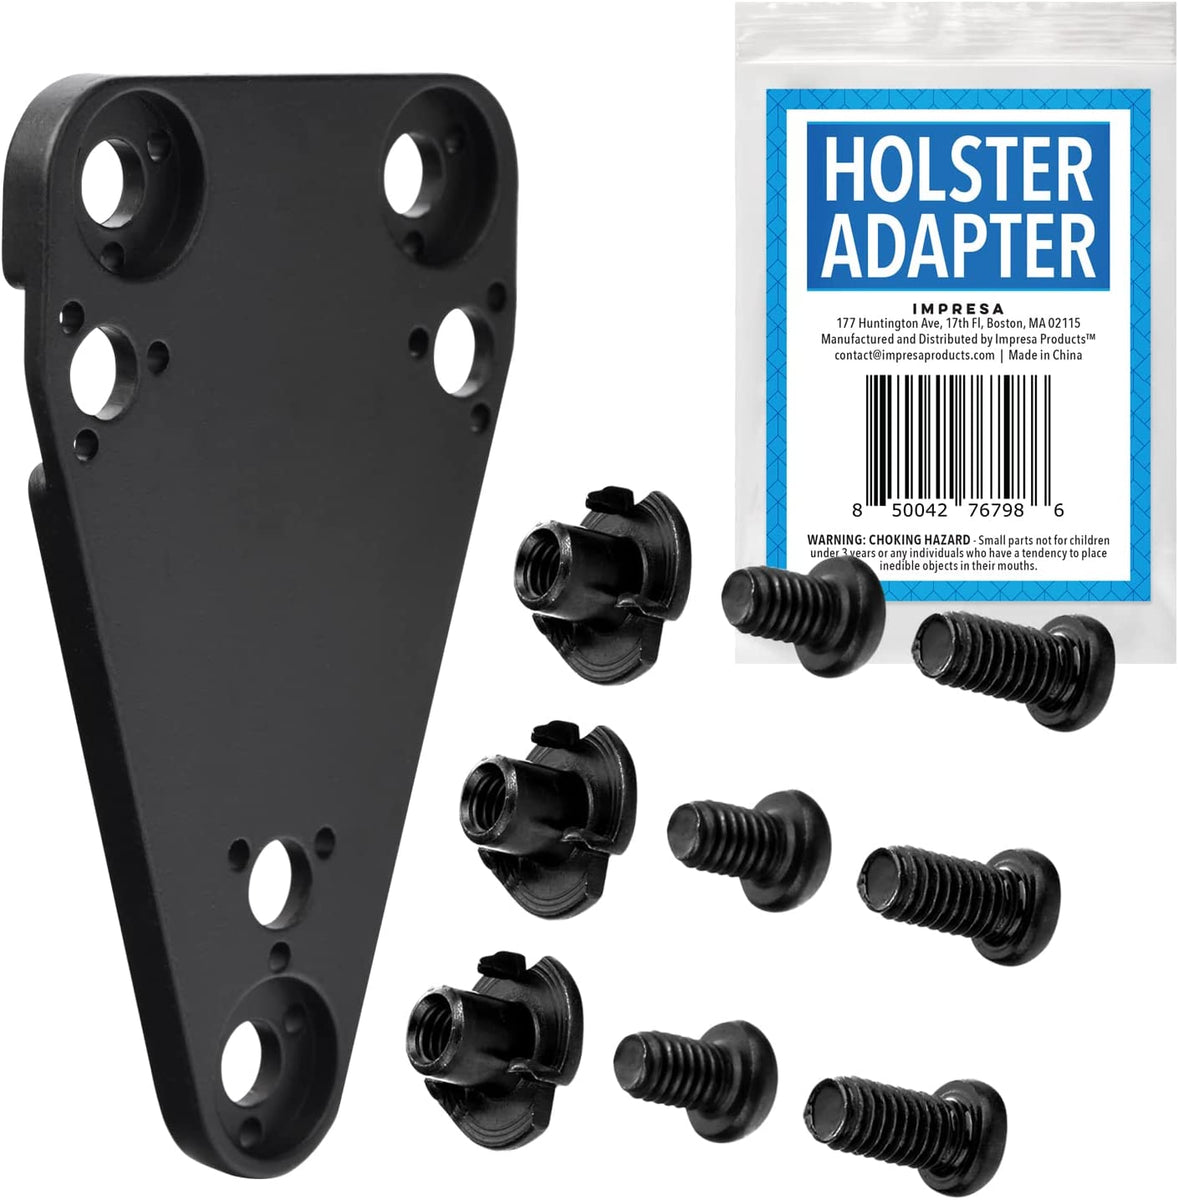 Impresa Holster Adapter for Blackhawk Holster & for Safariland Drop Le ...